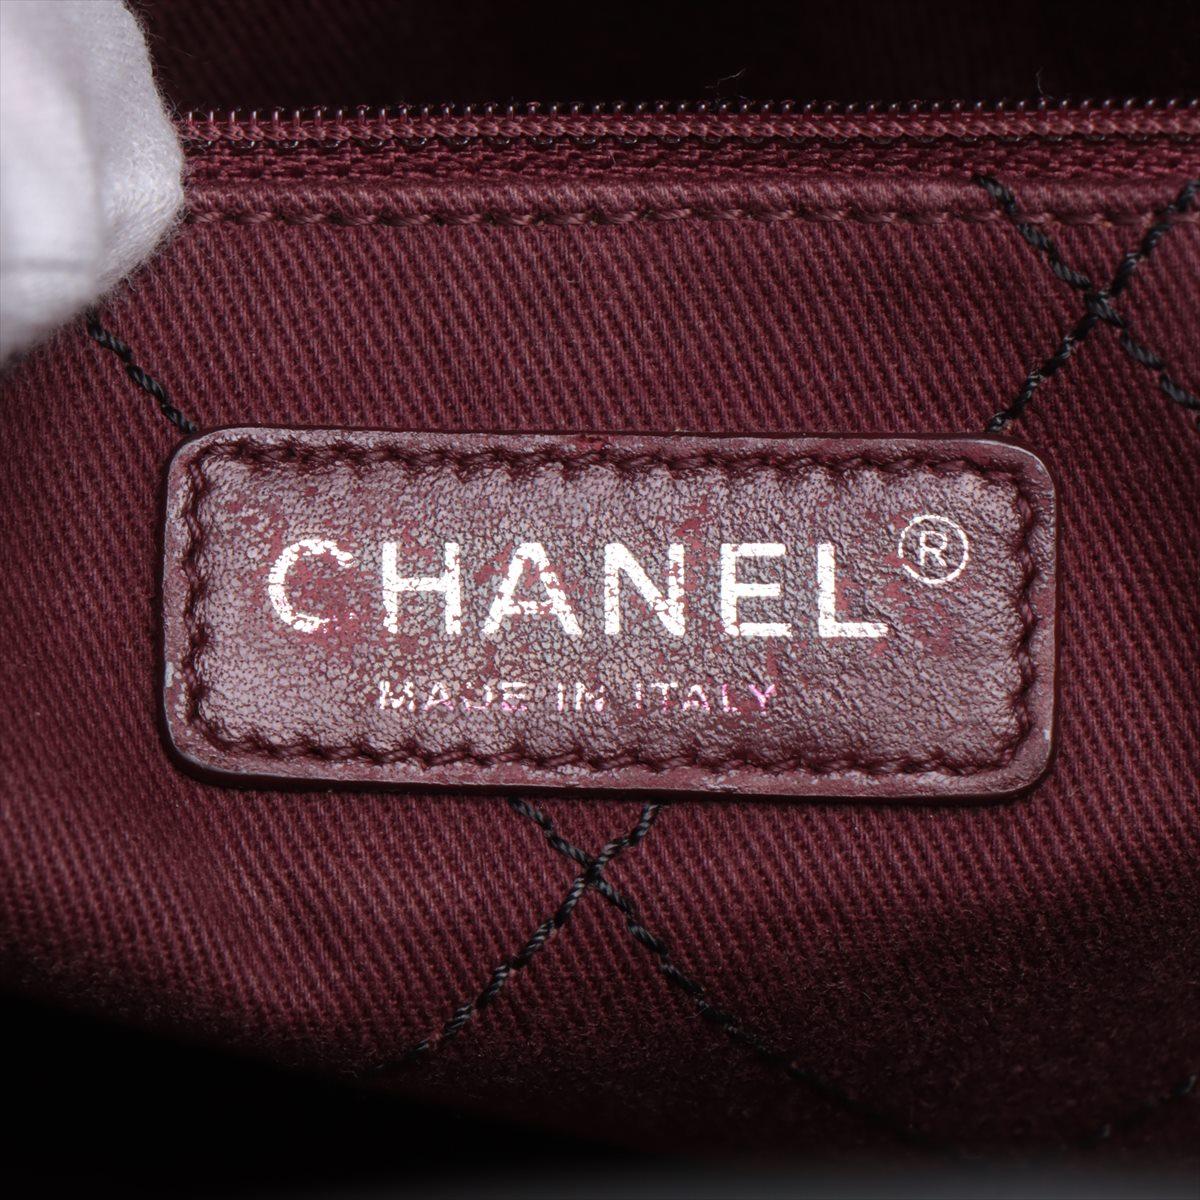 Chanel On The Road Caviar Skin Tote Bag Black 8